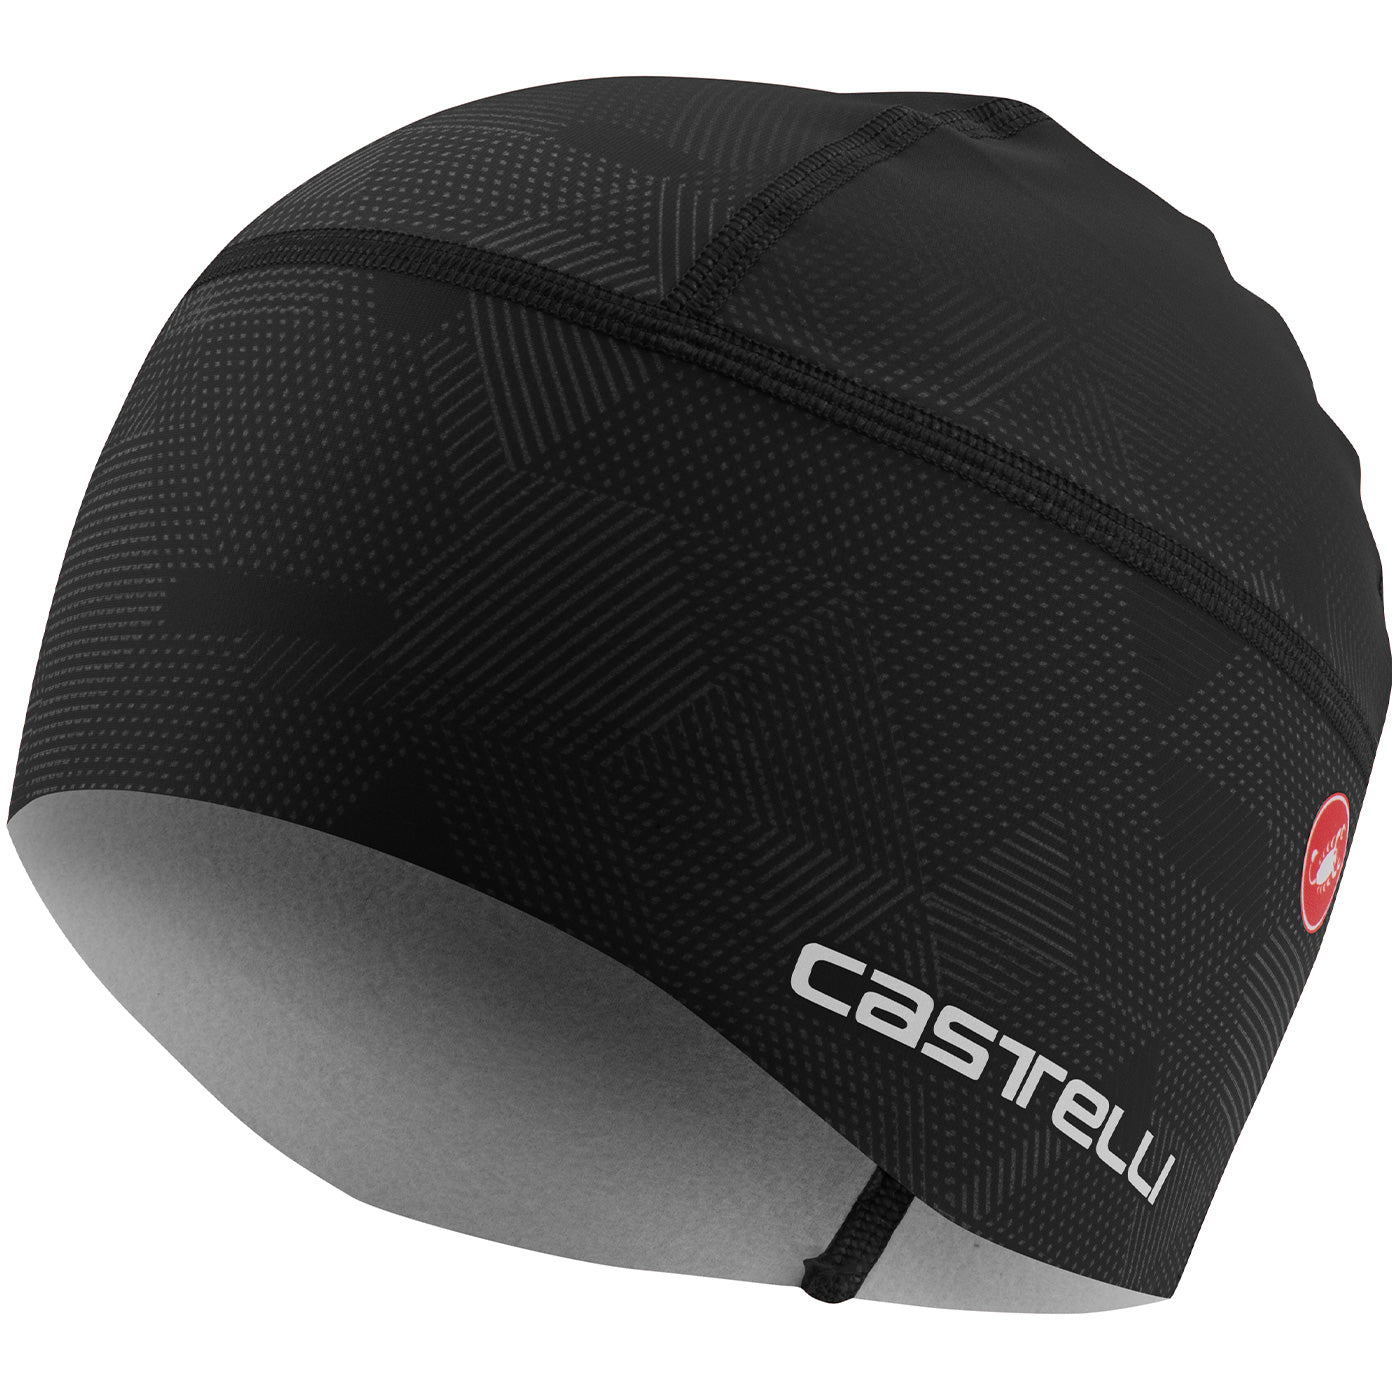 Castelli Pro Thermal woman skullcap - Black